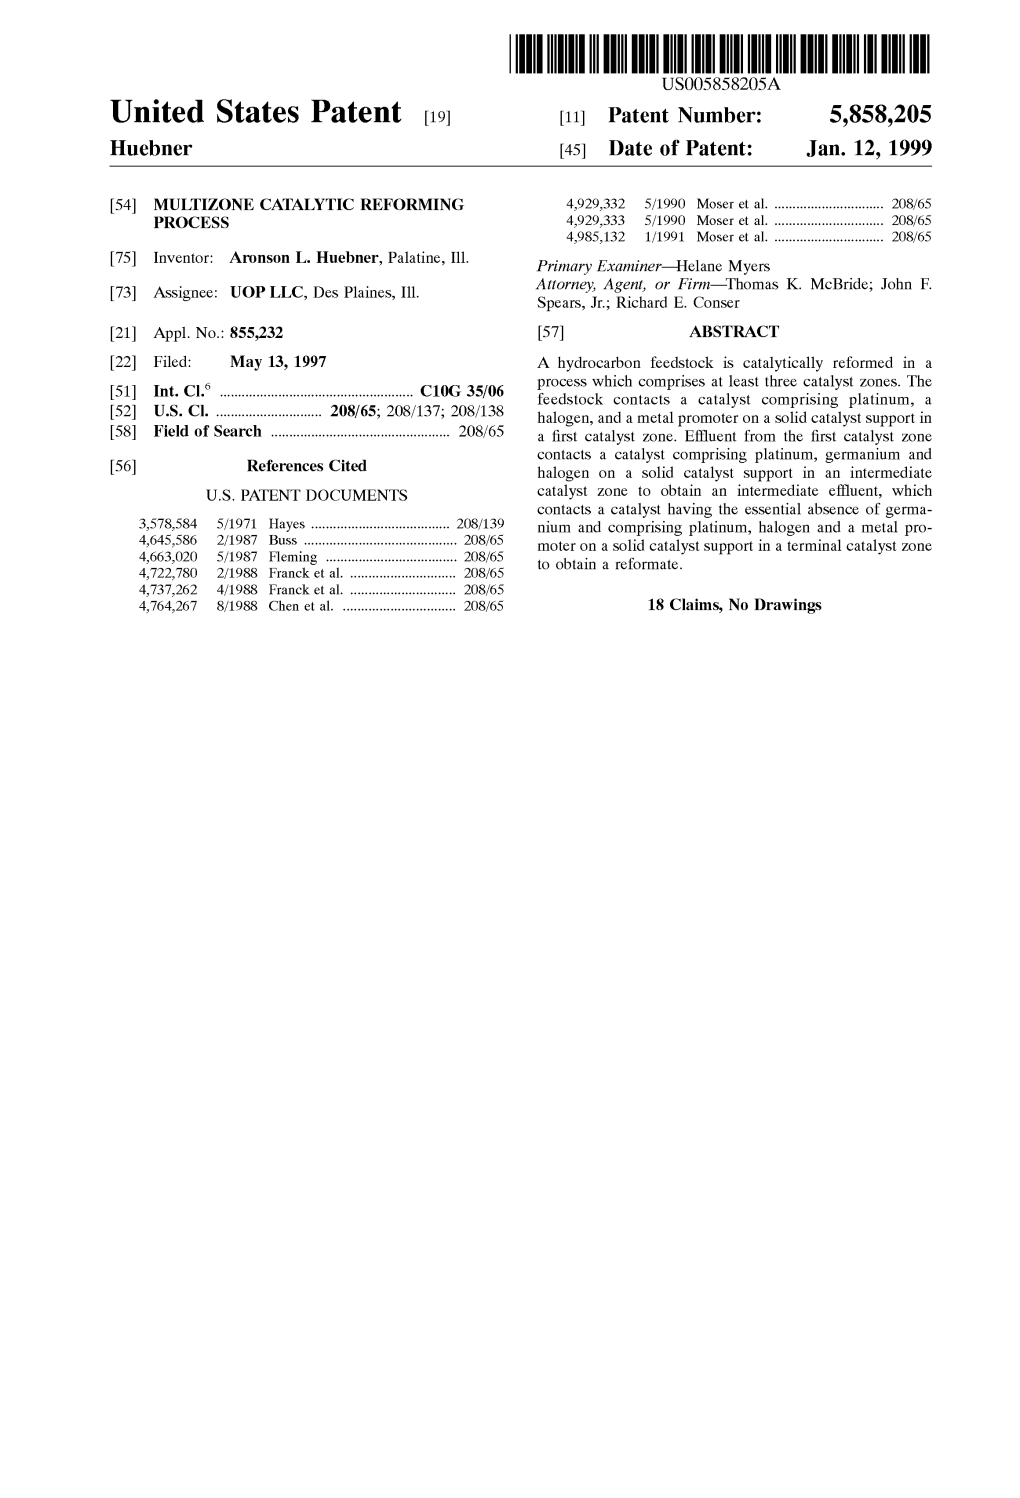 United States Patent (19) 11 Patent Number: 5,858,205 Huebner (45) Date of Patent: Jan